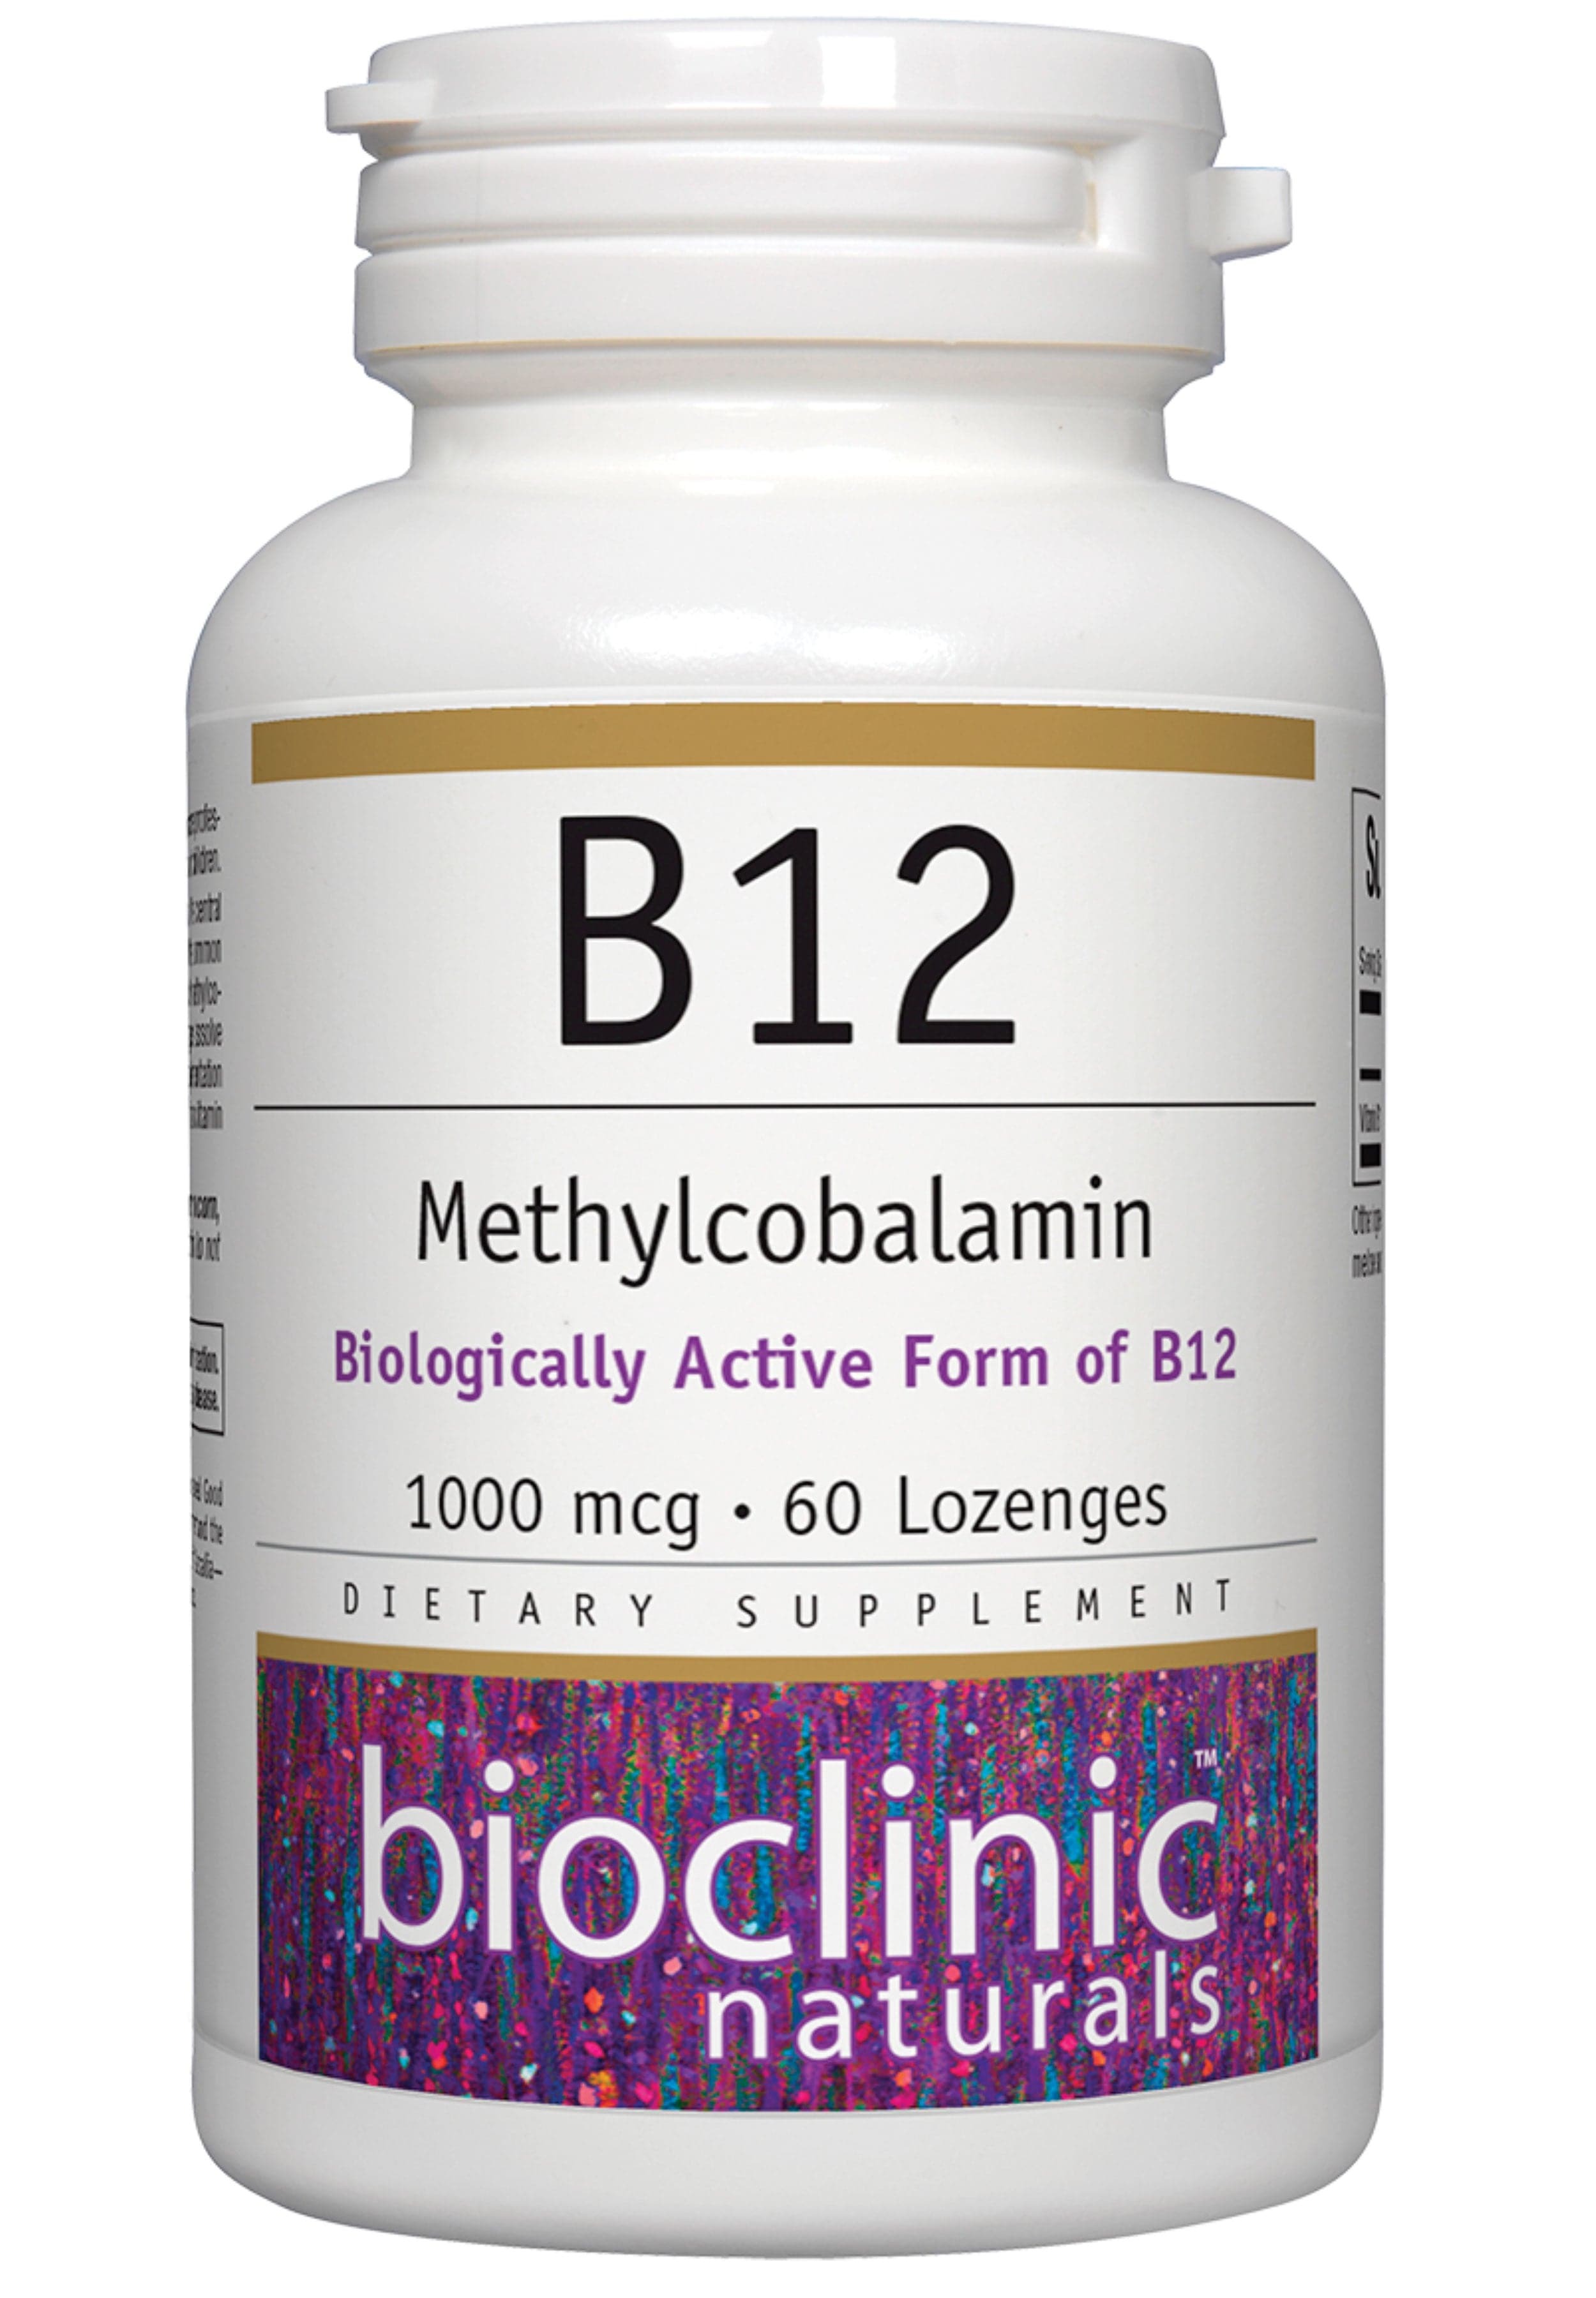 Bioclinic Naturals B12 Methylcobalamin 1000 mcg